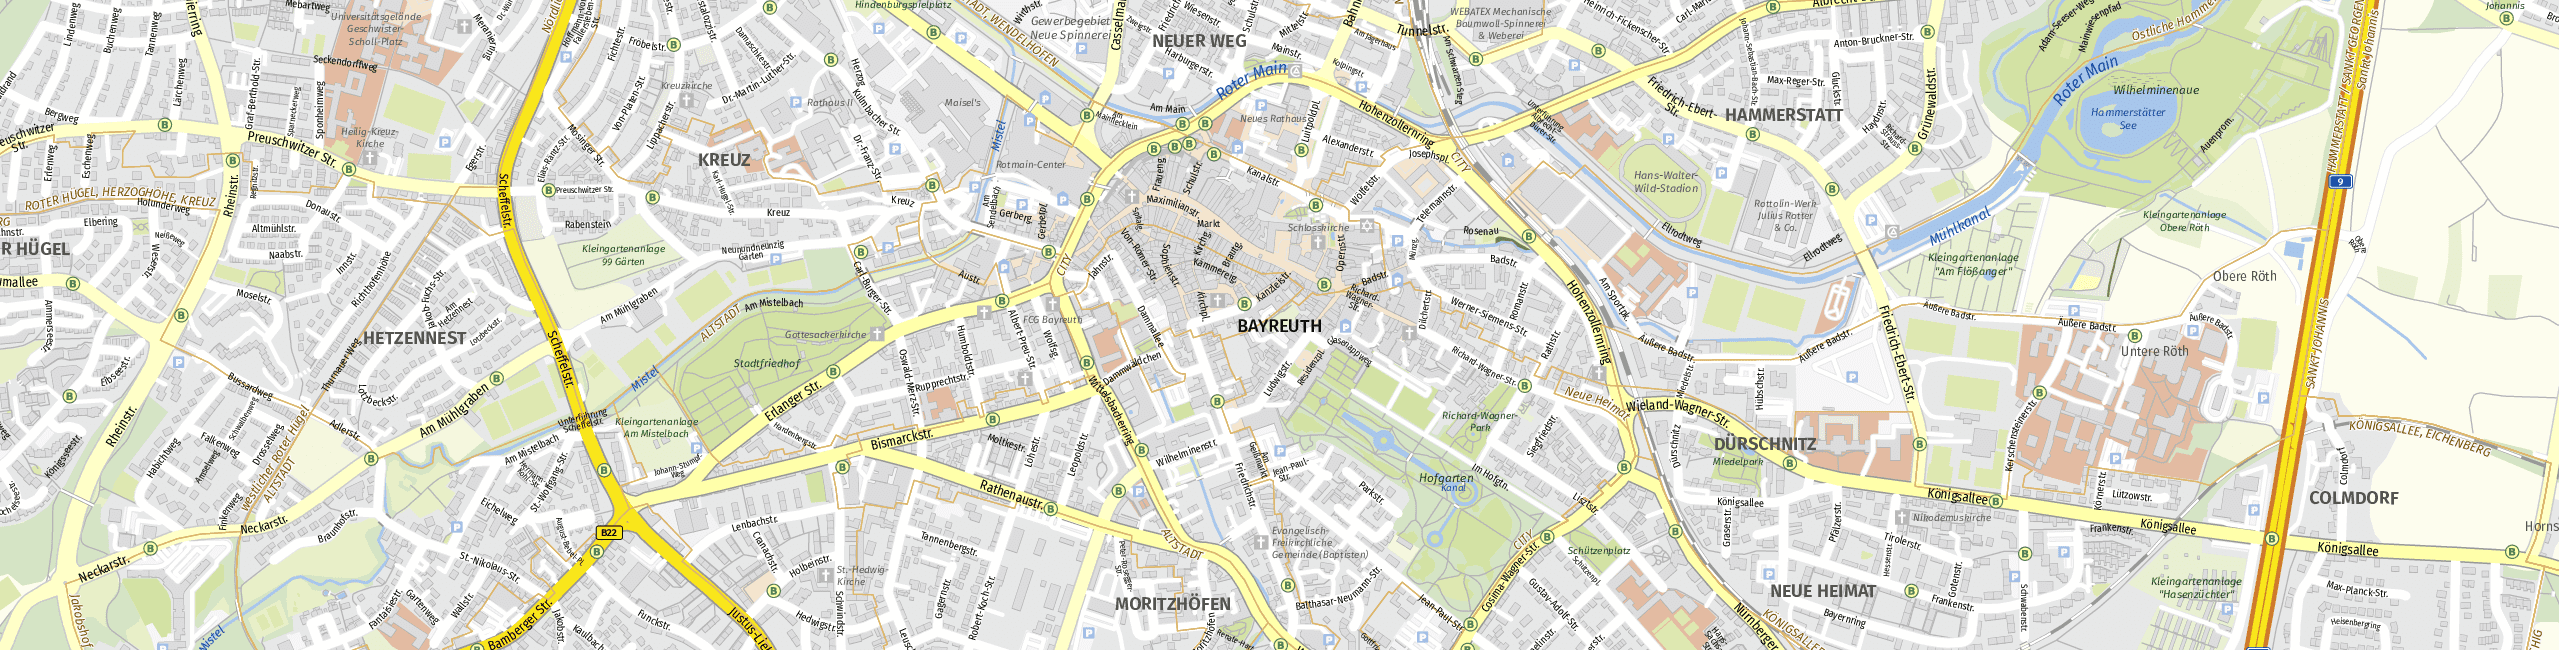 Stadtplan Bayreuth zum Downloaden.